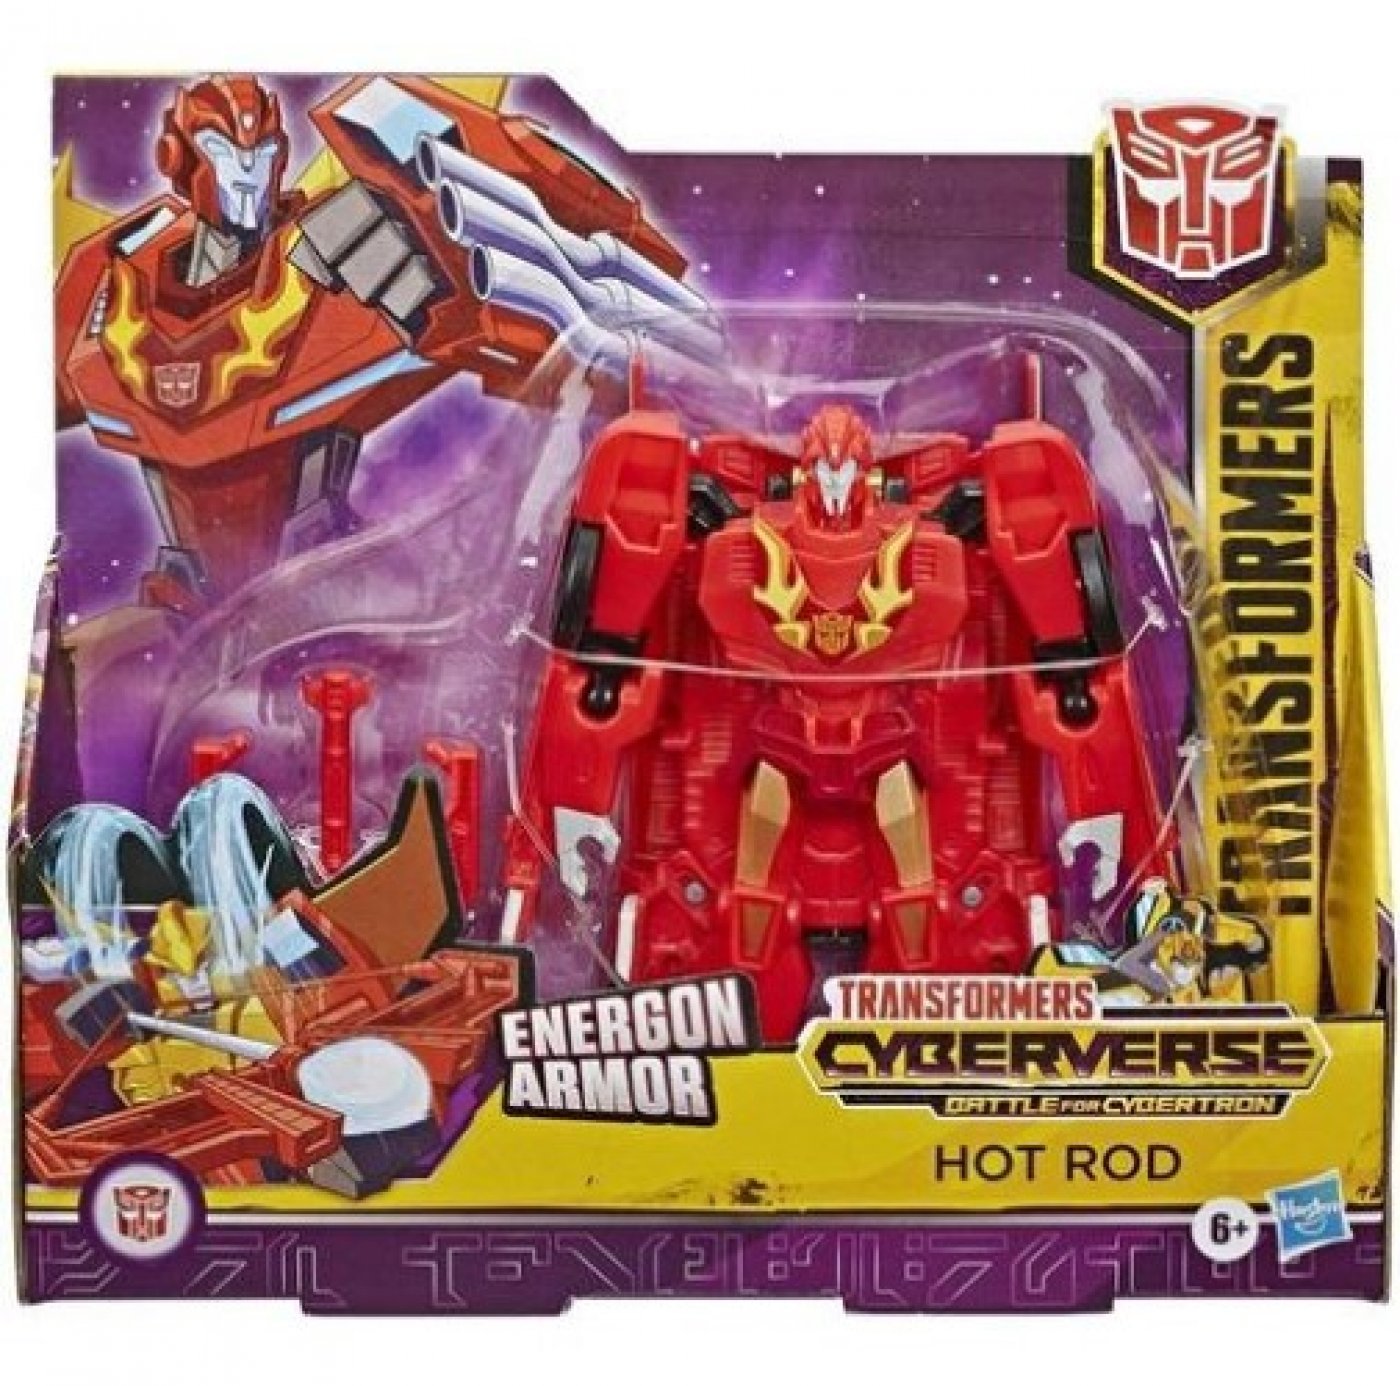 Transformers Cyberverse Hot Rod Hasbro Energon Armor   (SIN STOCK)   )